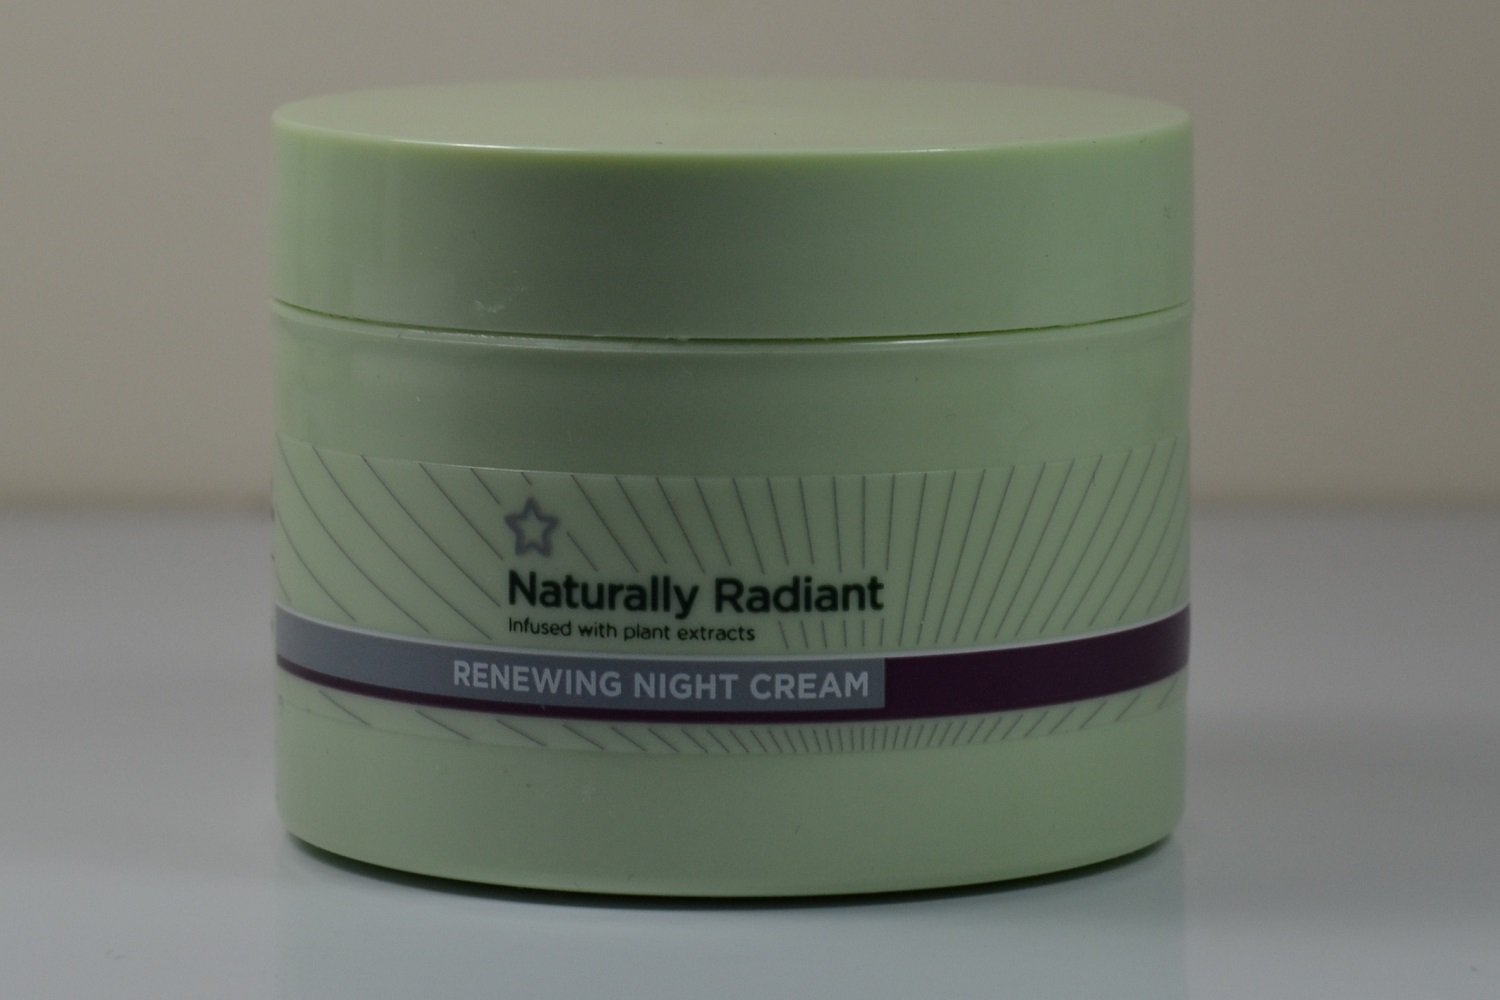 Naturally Radiant Renewing Night Cream